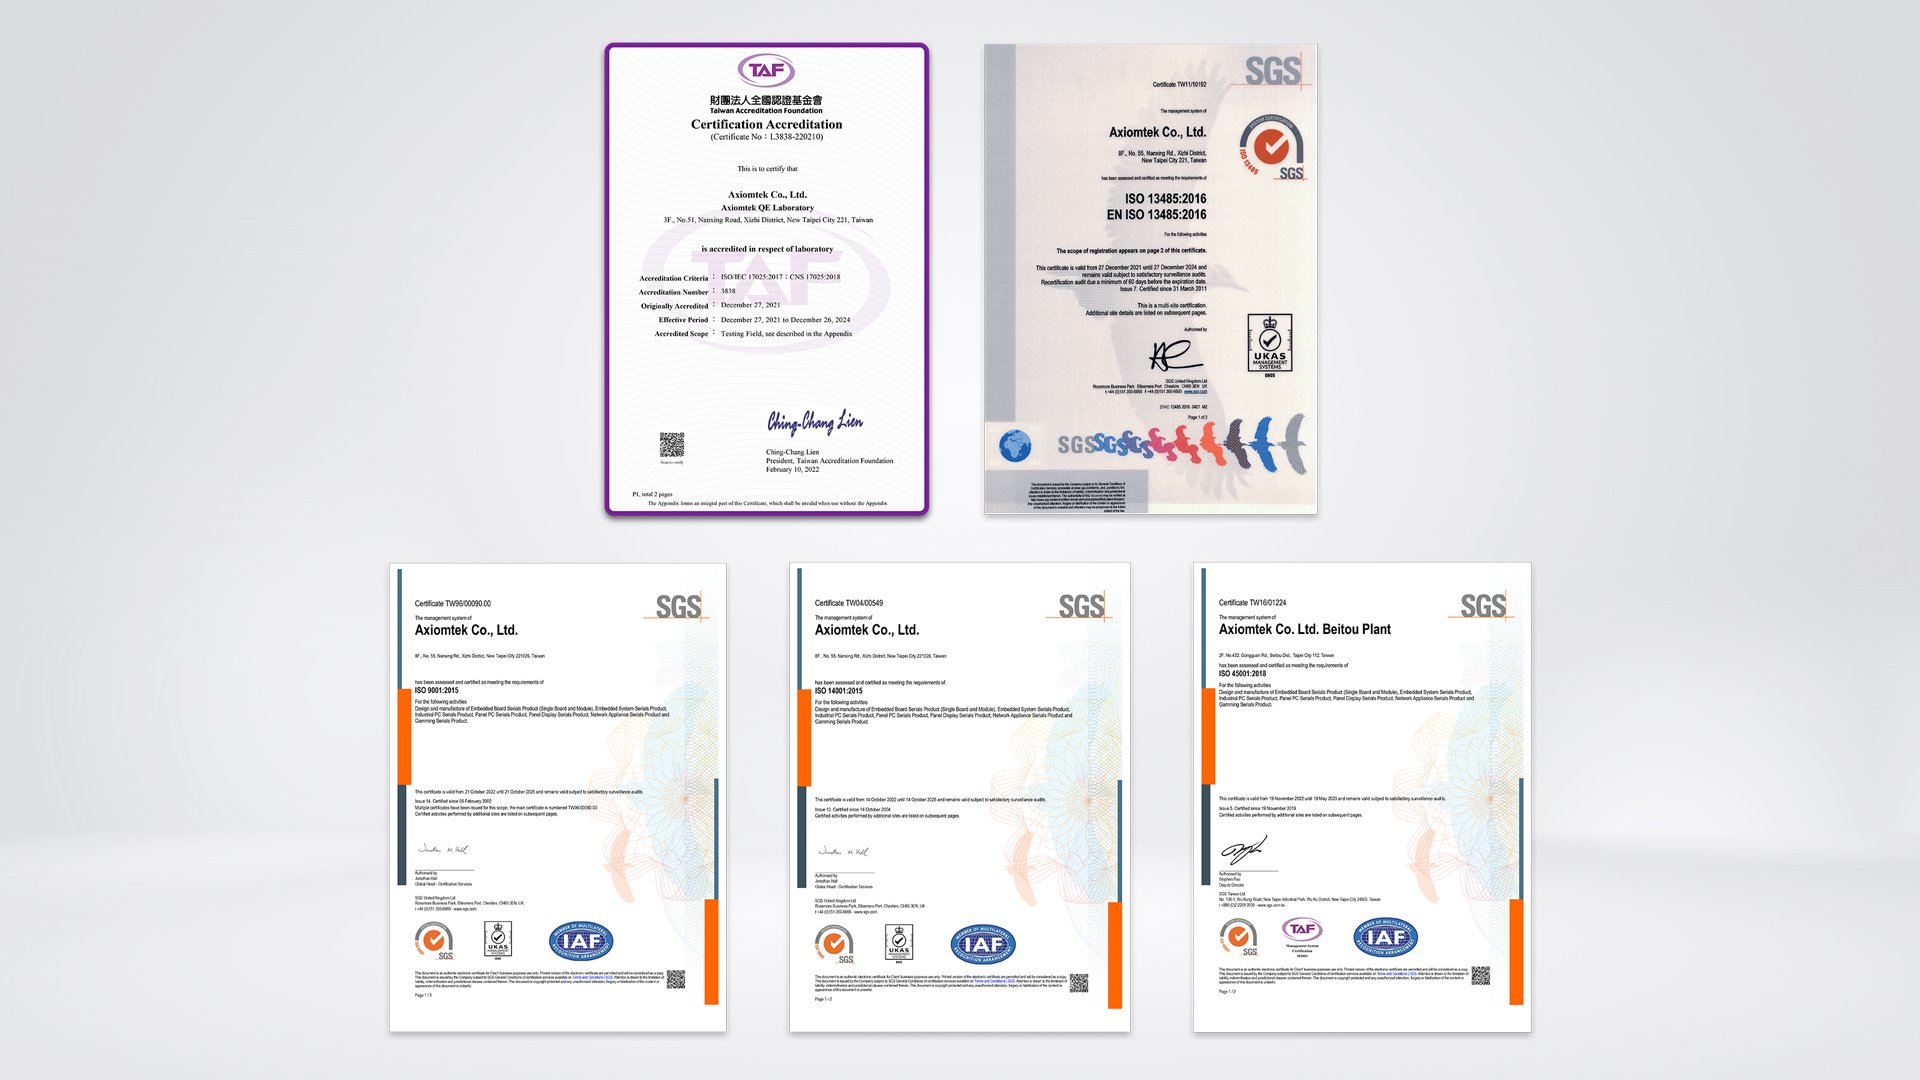 axiomtech-certificates.jpg